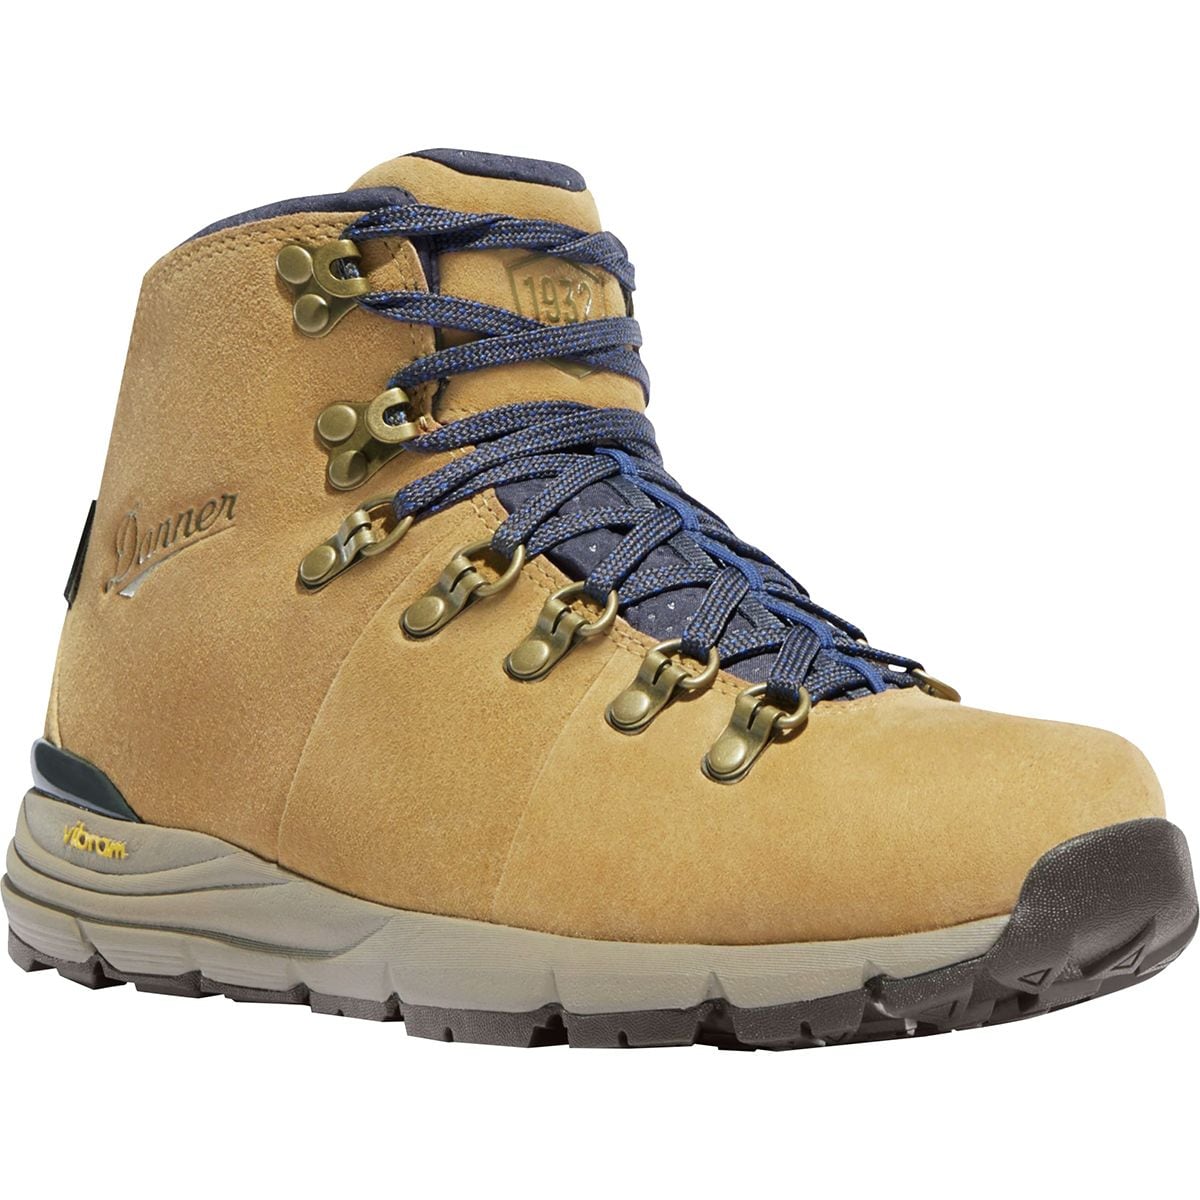 Danner Mountain 600 Hiking Boot - Women's | Backcountry.com